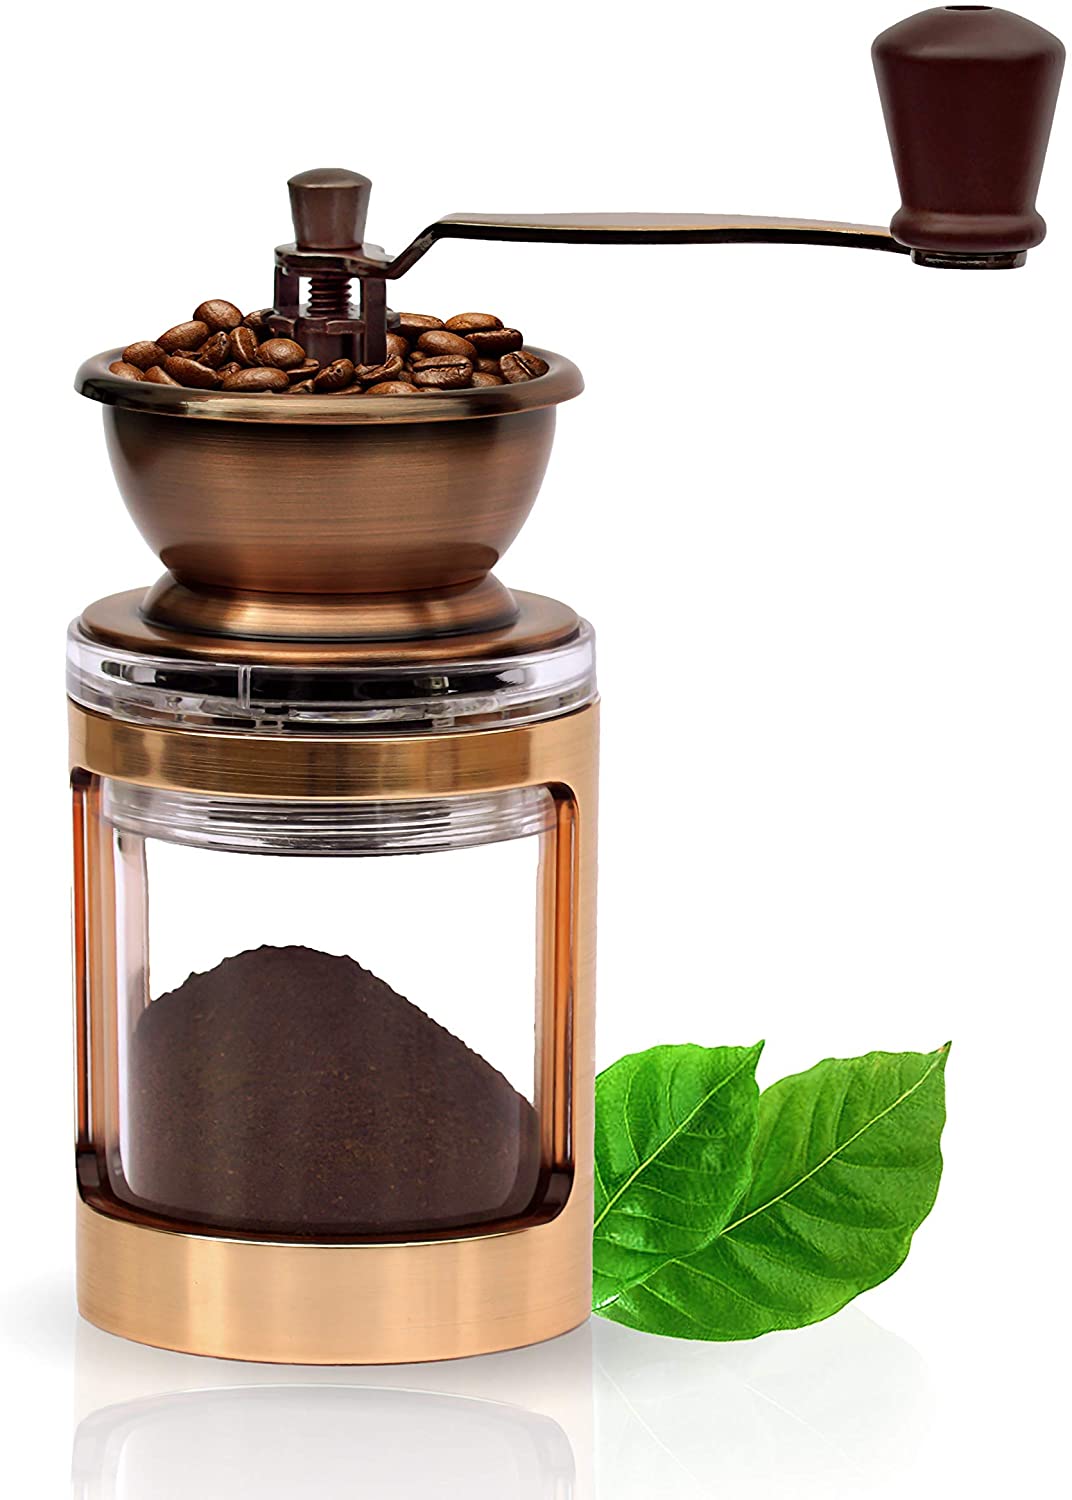 Planke & Neumann Gold X Hand Coffee Grinder, Manual Coffee Grinder, Coffee Mill, Ceramic Grinder, Power Free